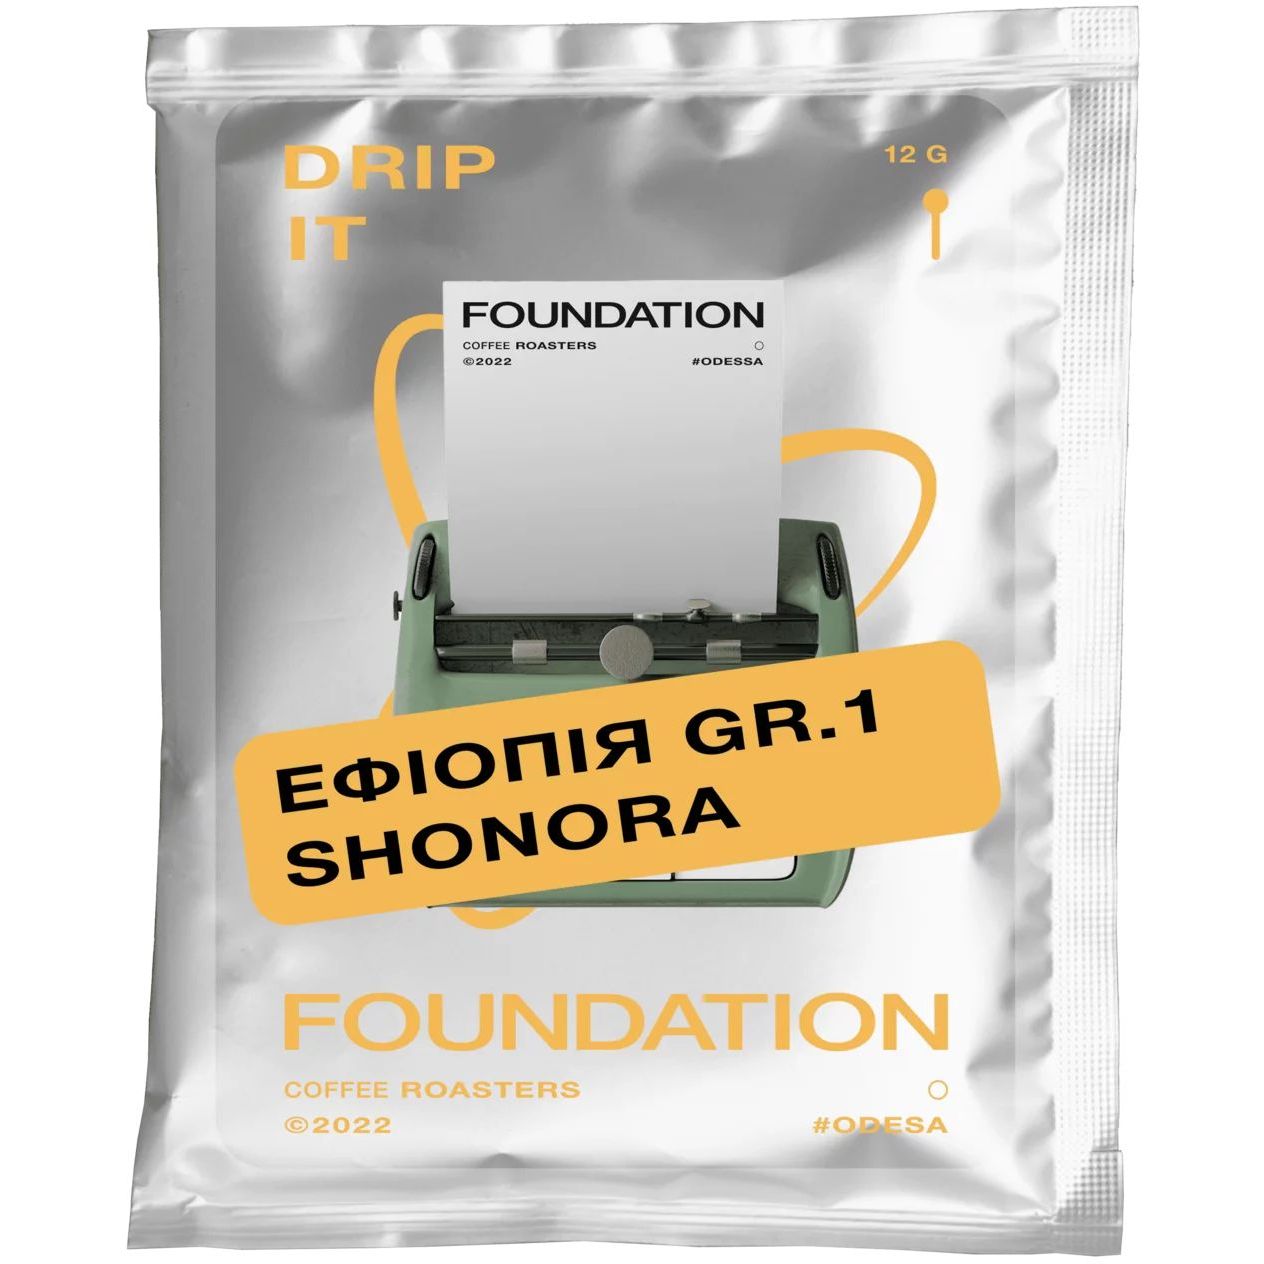 Дрип-кофе Foundation Эфиопия Gr.1 Shonora 120 г (10 шт. х 12 г) - фото 1